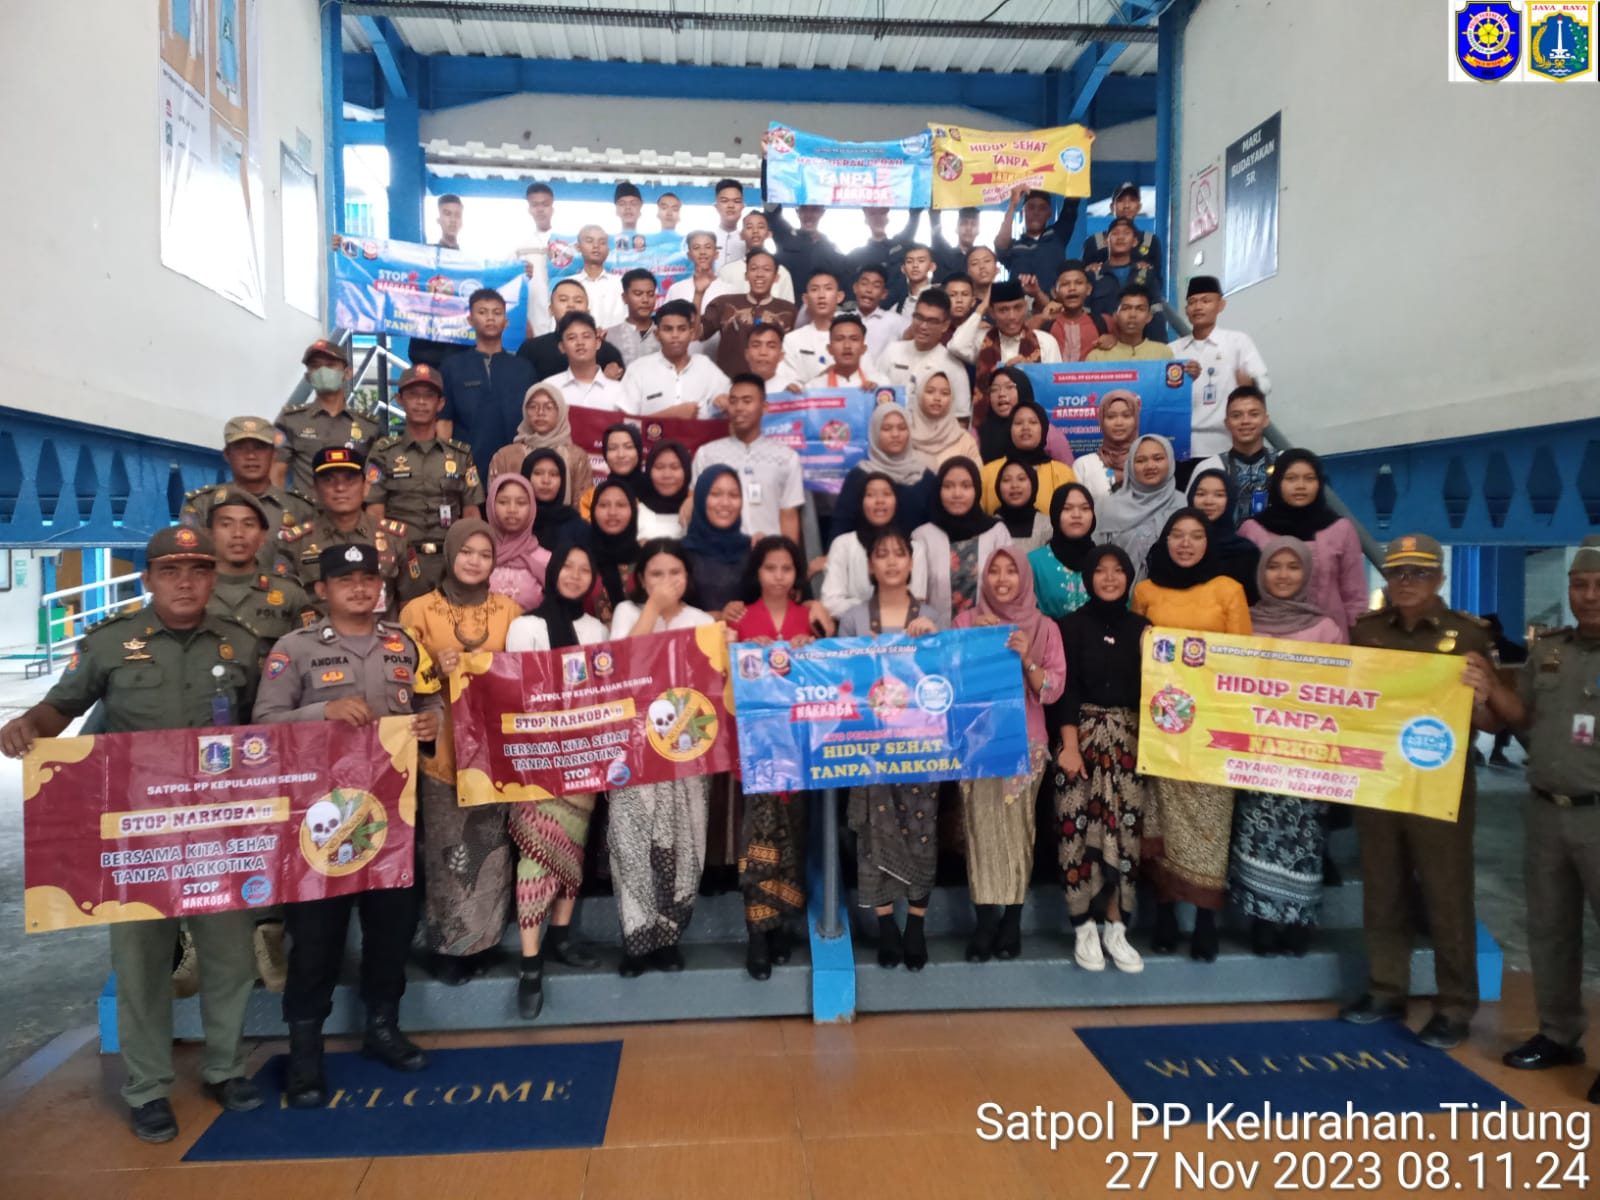 Bhabinkamtibmas Pulau Tidung Rayakan Hari Guru Nasional Bersama Murid SMKN 61 Jakarta dalam Kegiatan 'Police Goes to School’